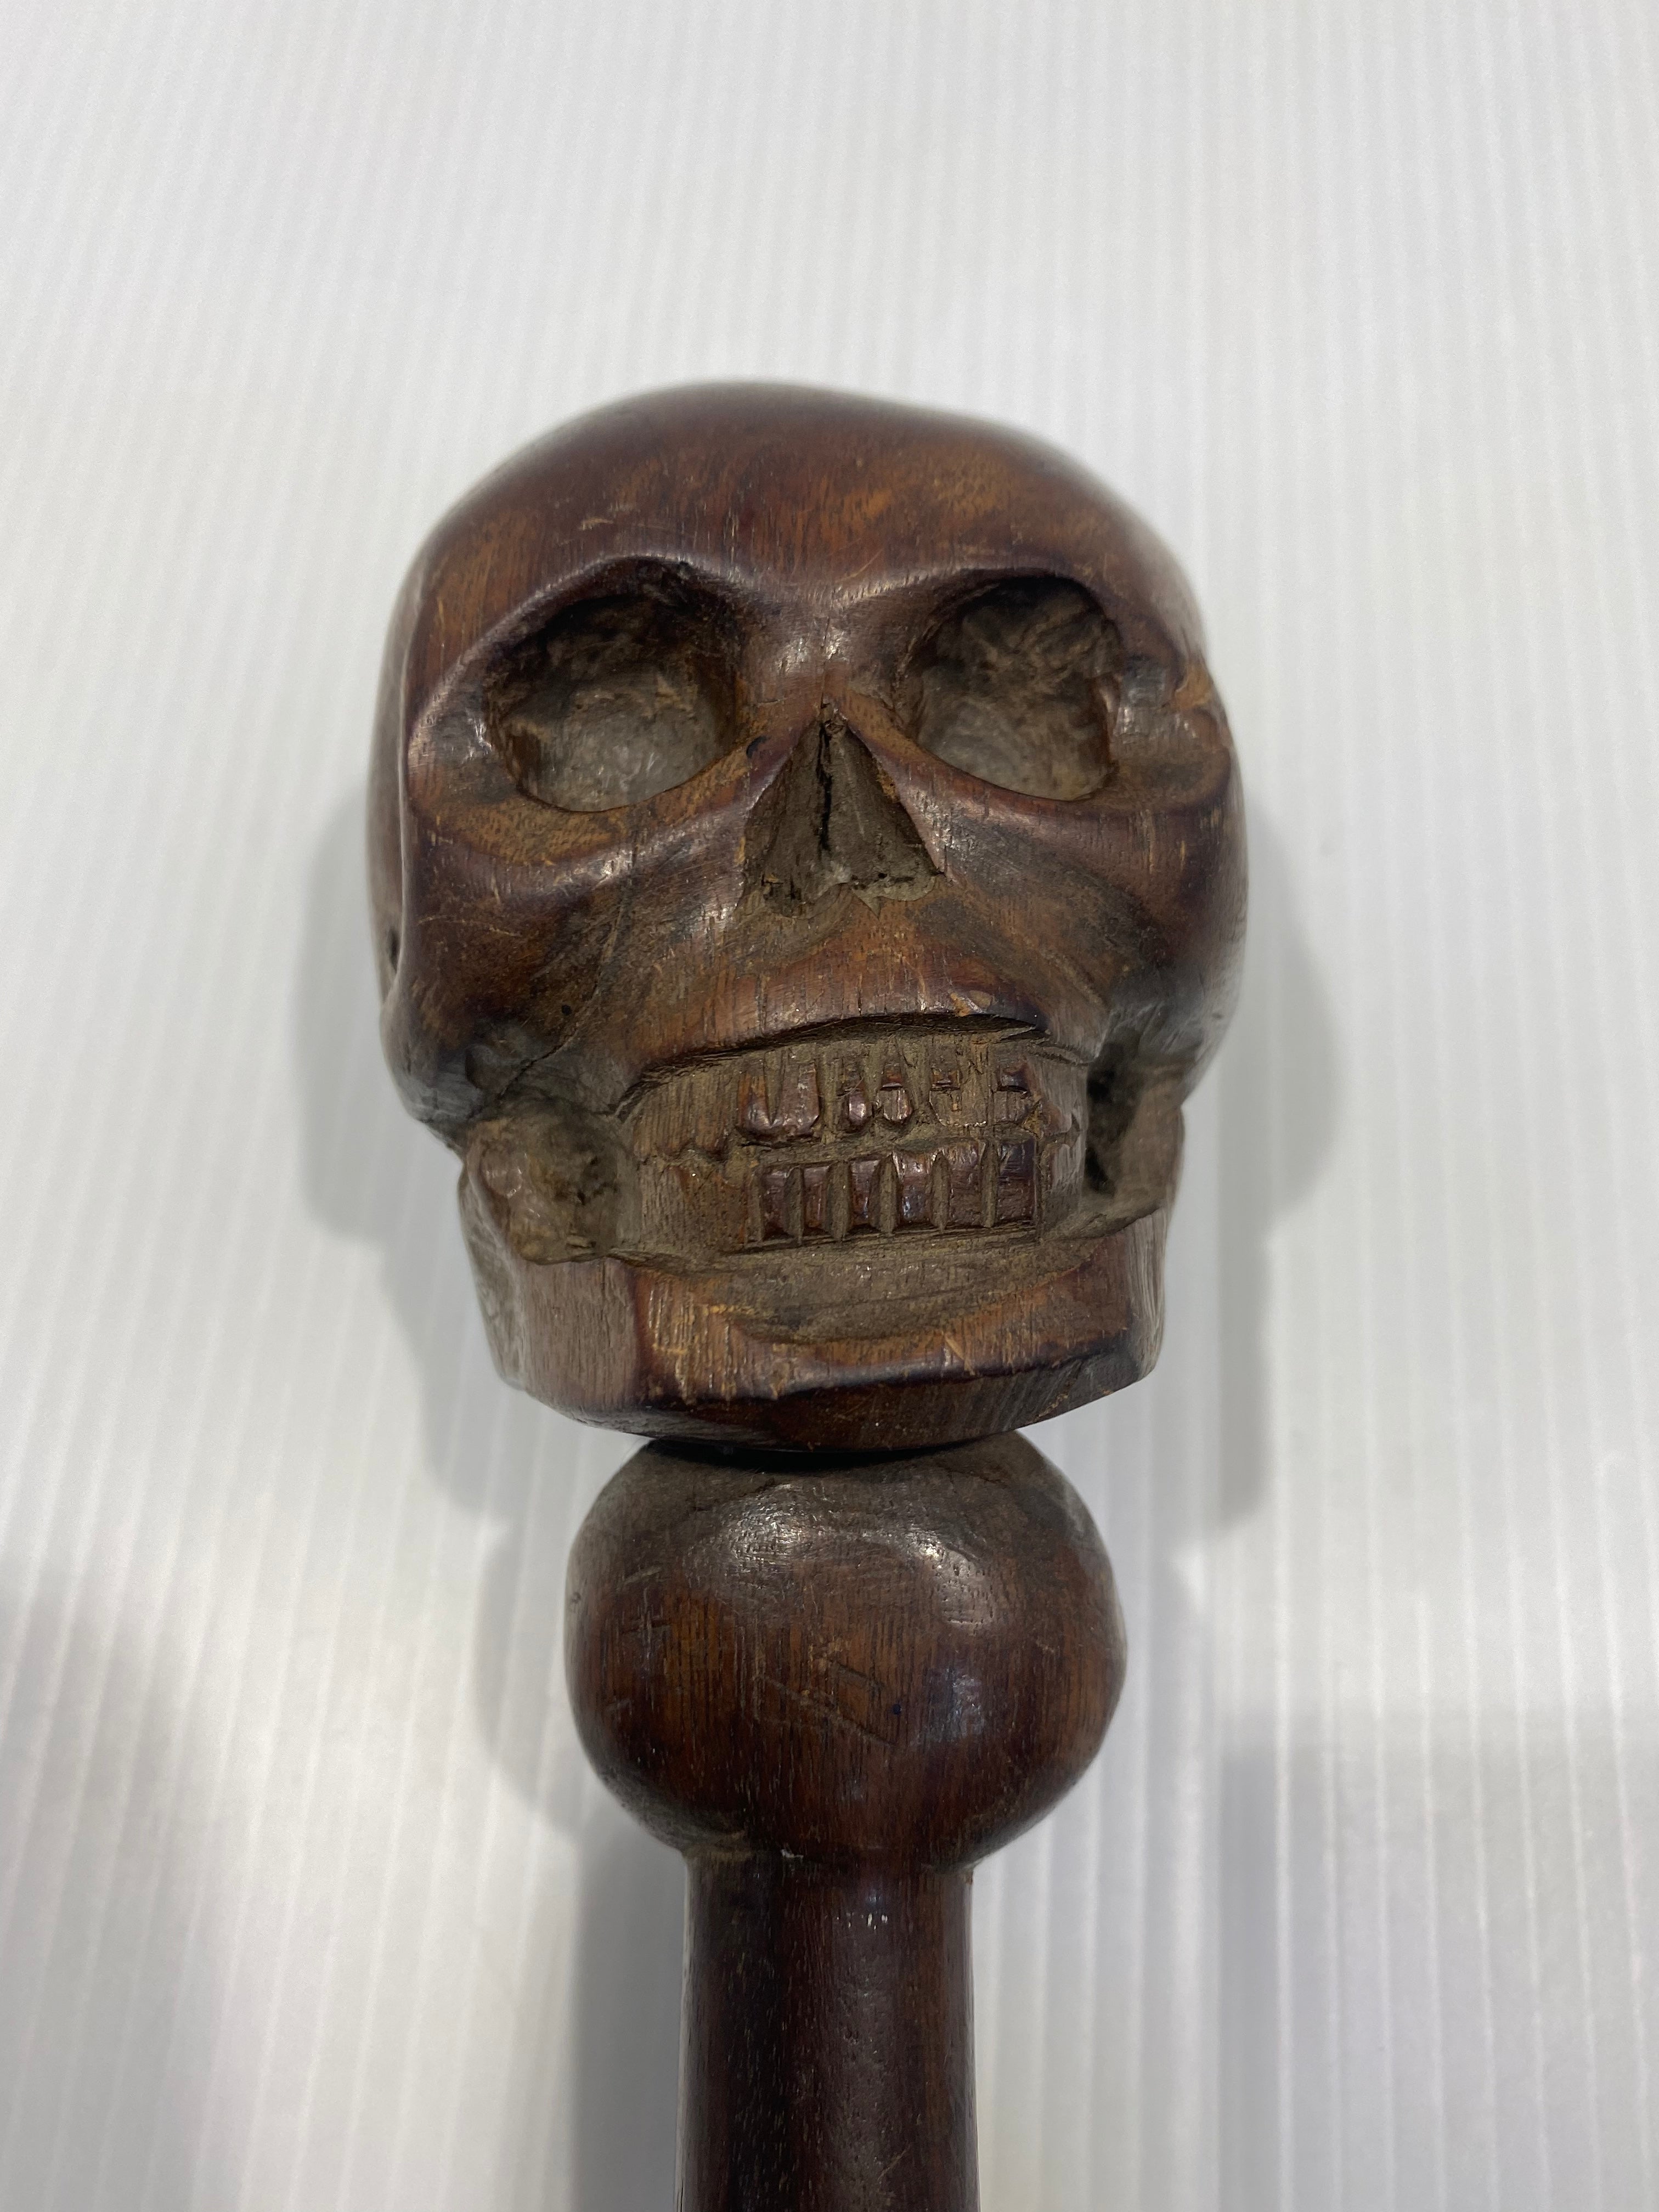 Antique Mexican shaman's scepter